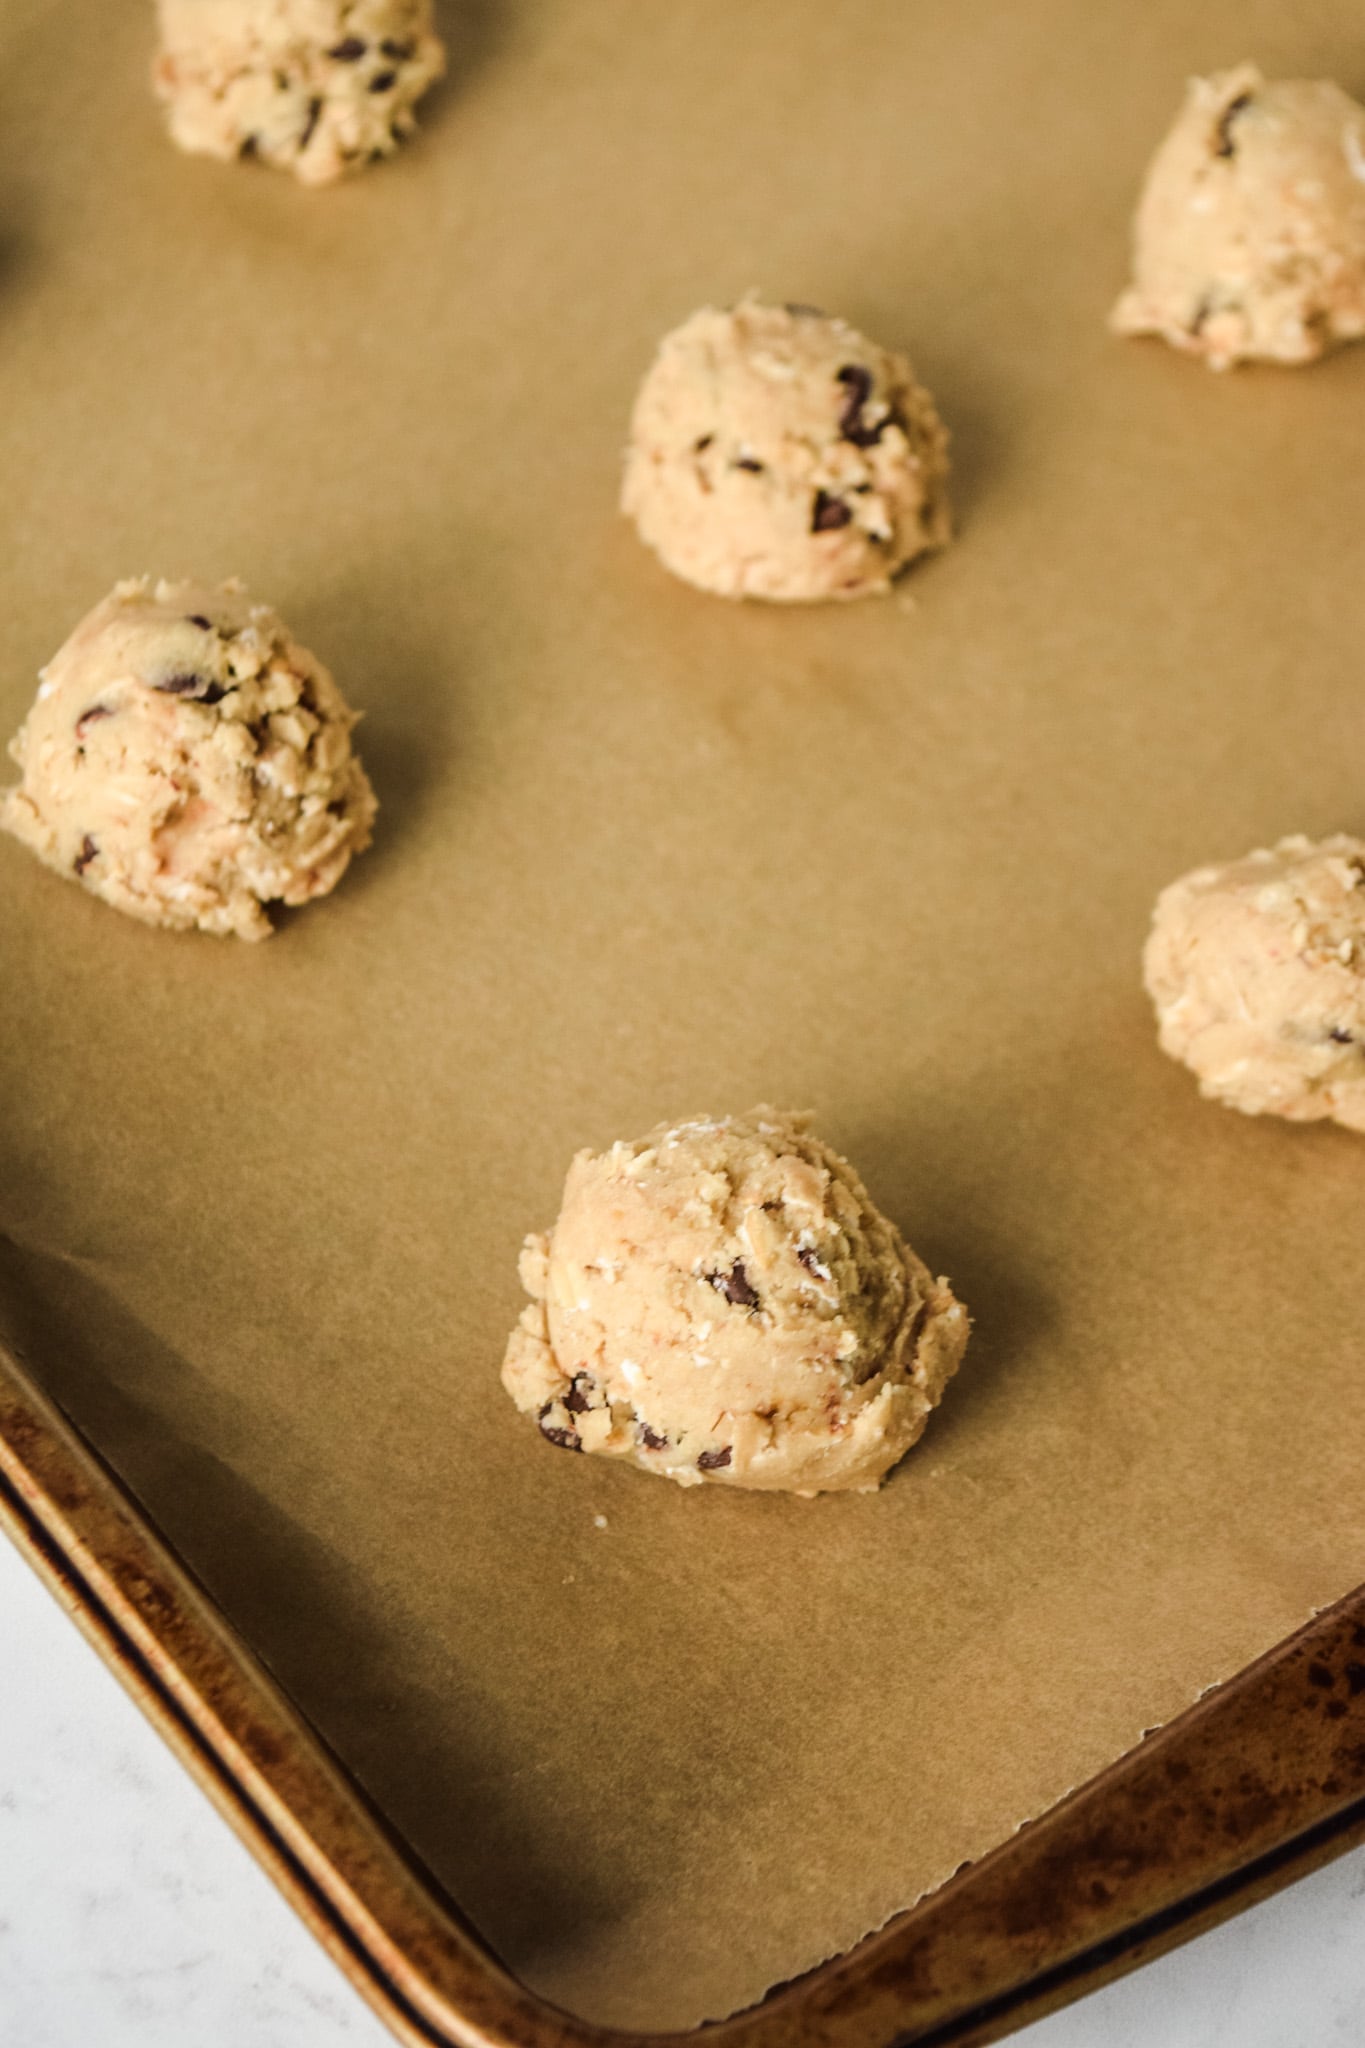 Gluten free chocolate chip cookie dough on baking sheet